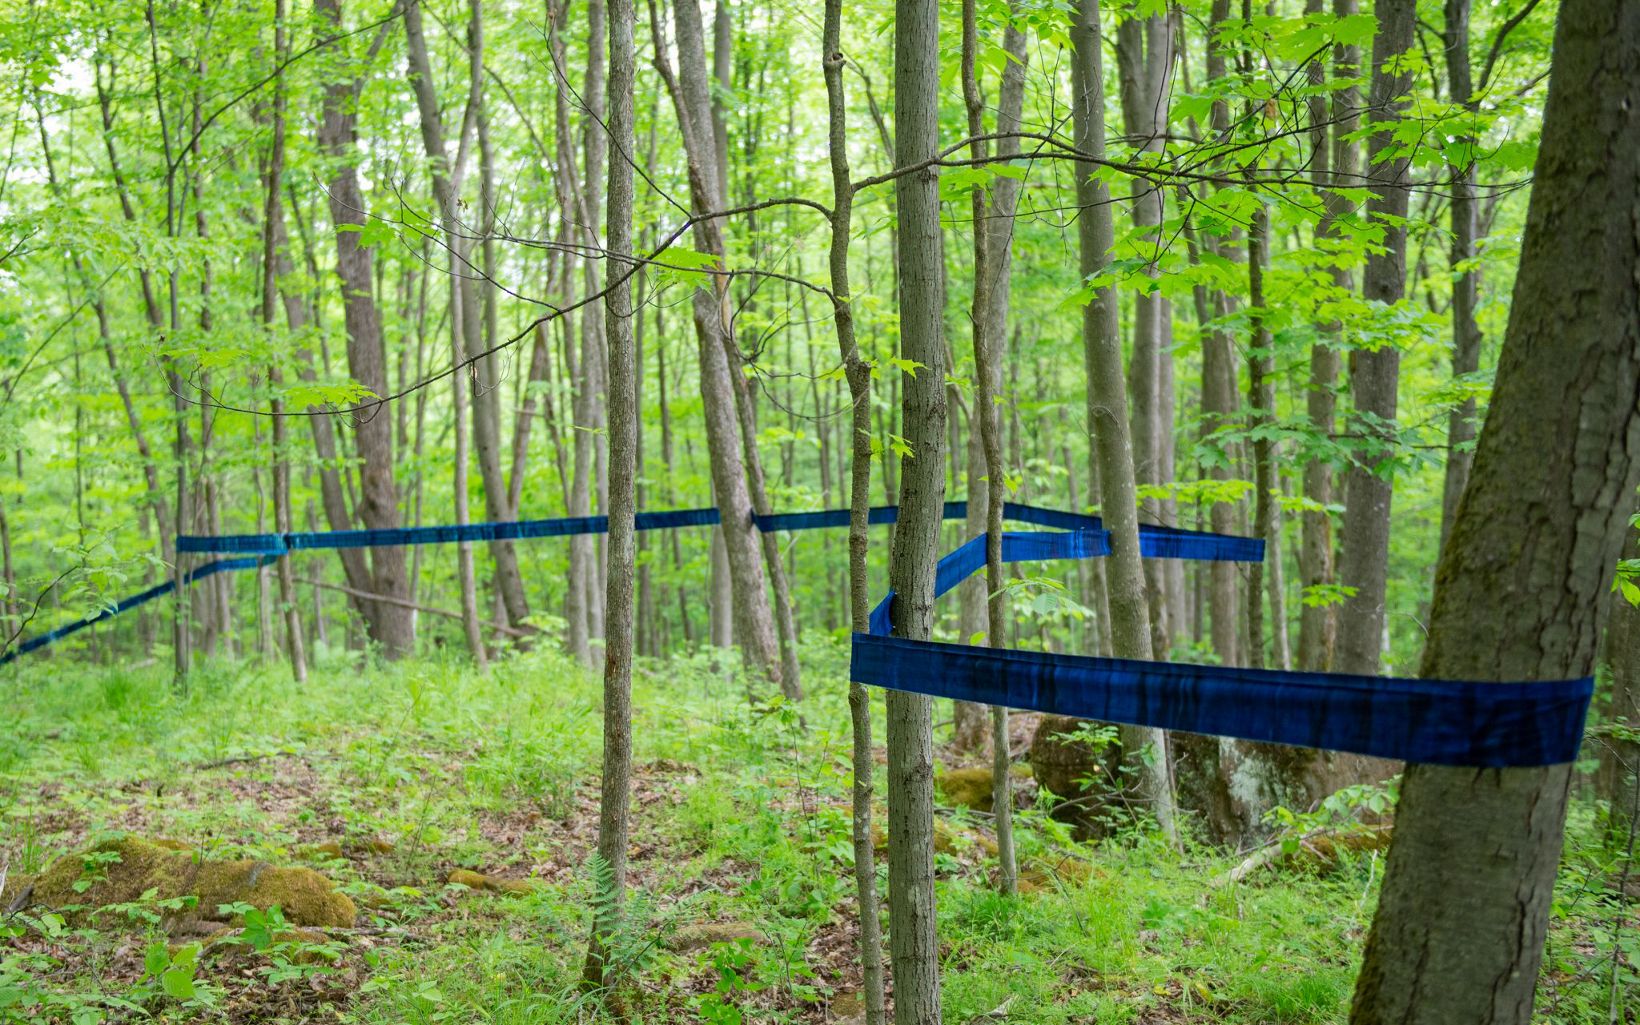 Cyanotype "blue ridge line" art installation. 